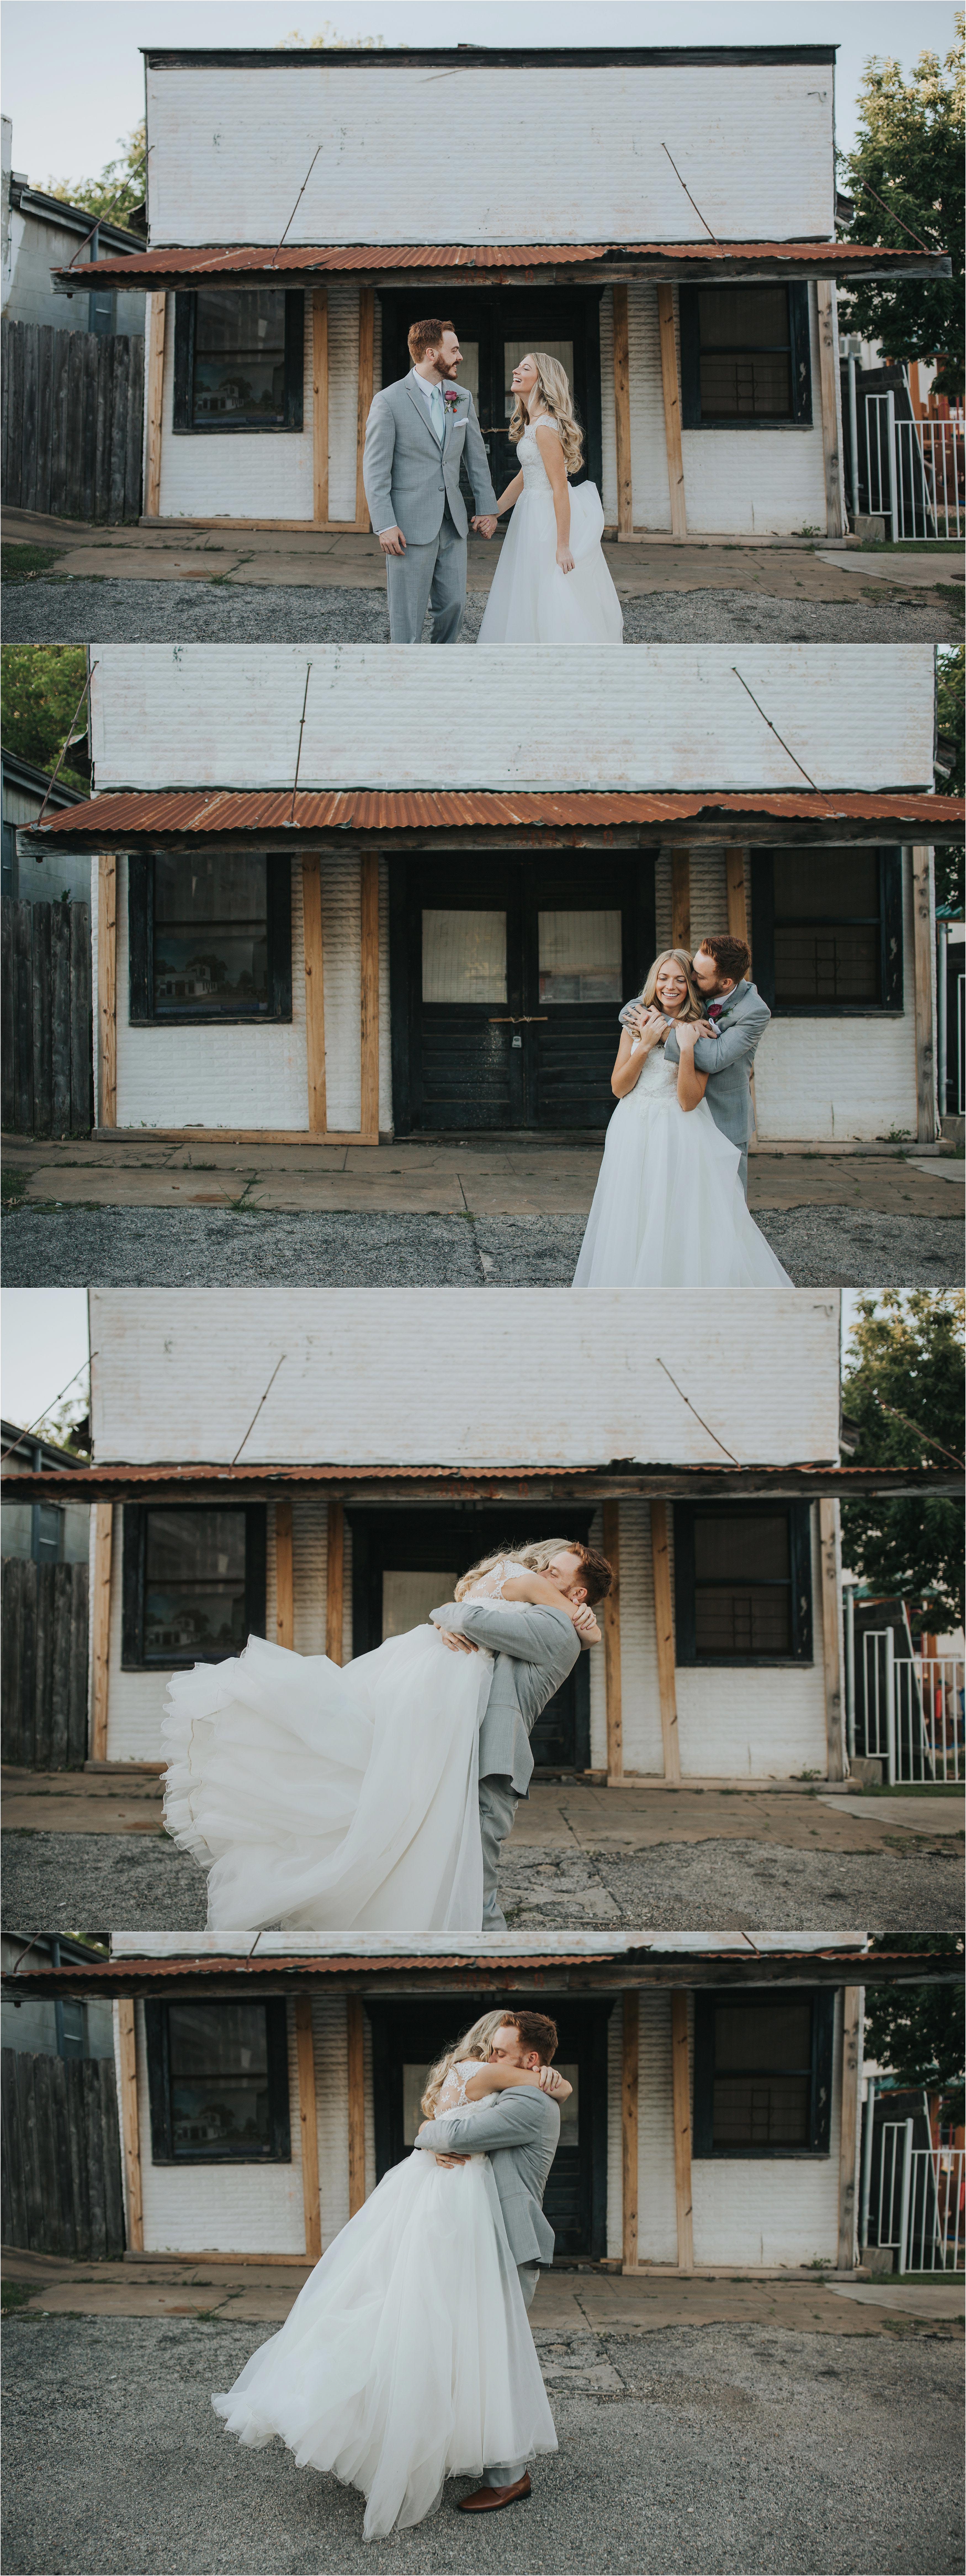 union-on-eighth-wedding-fredericksburg-texas-oakwood-photo-video-48.jpg